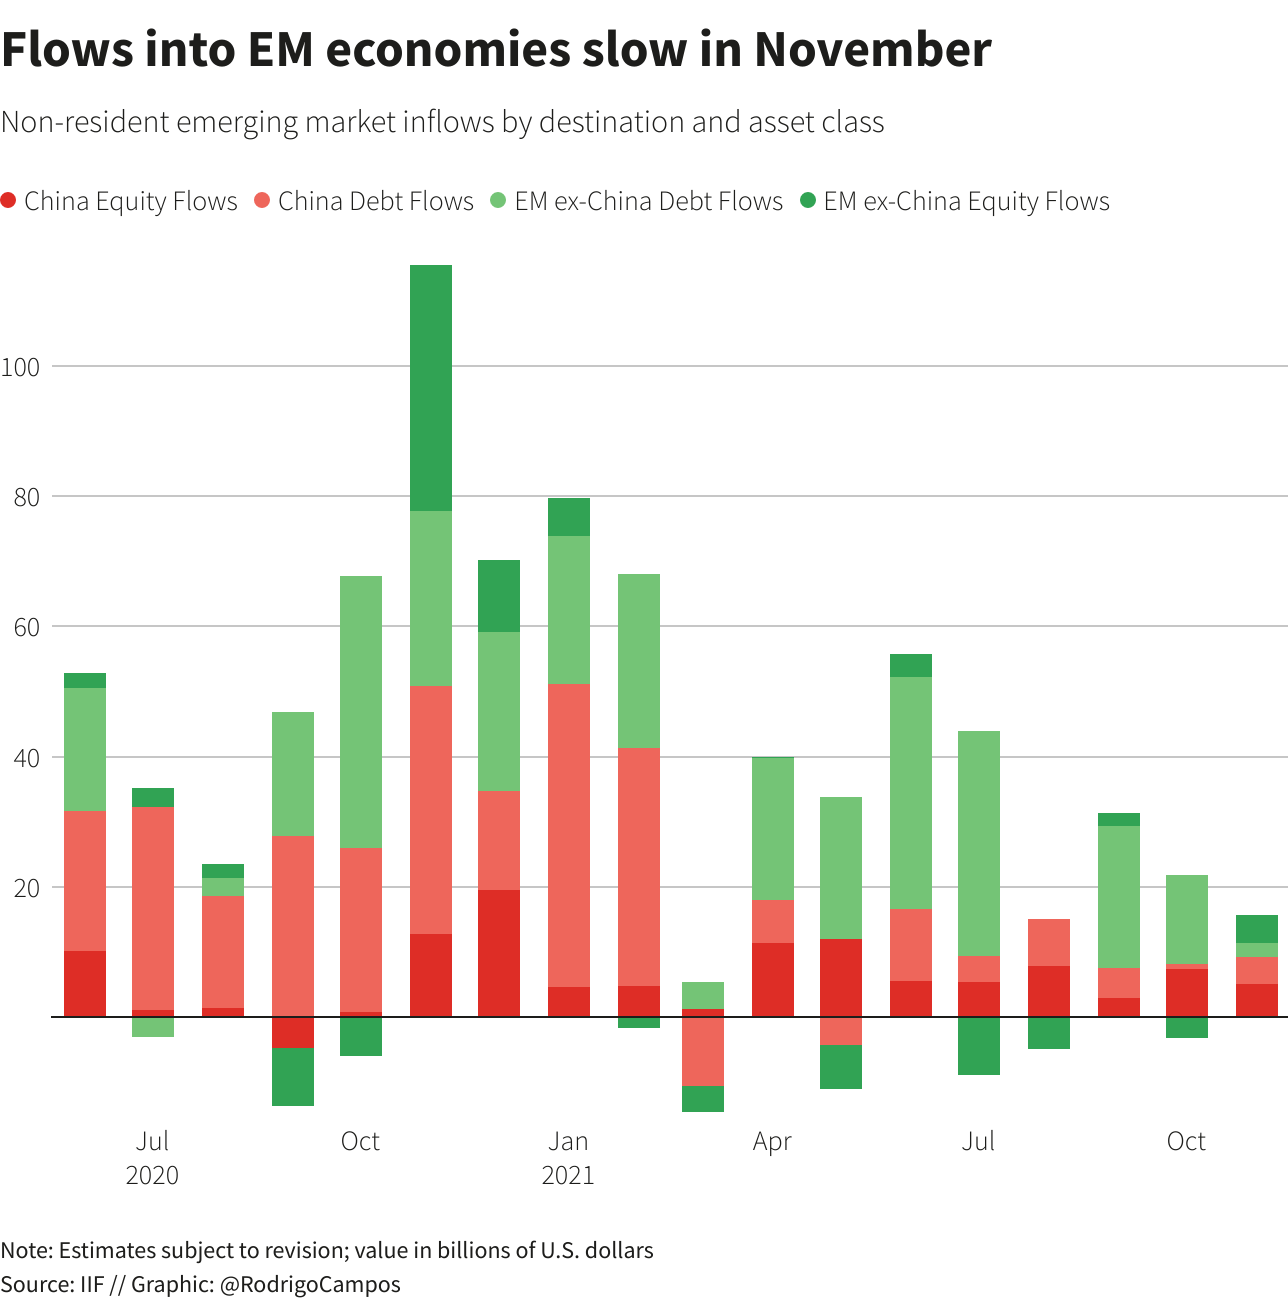 Flows into EM economies slow in November